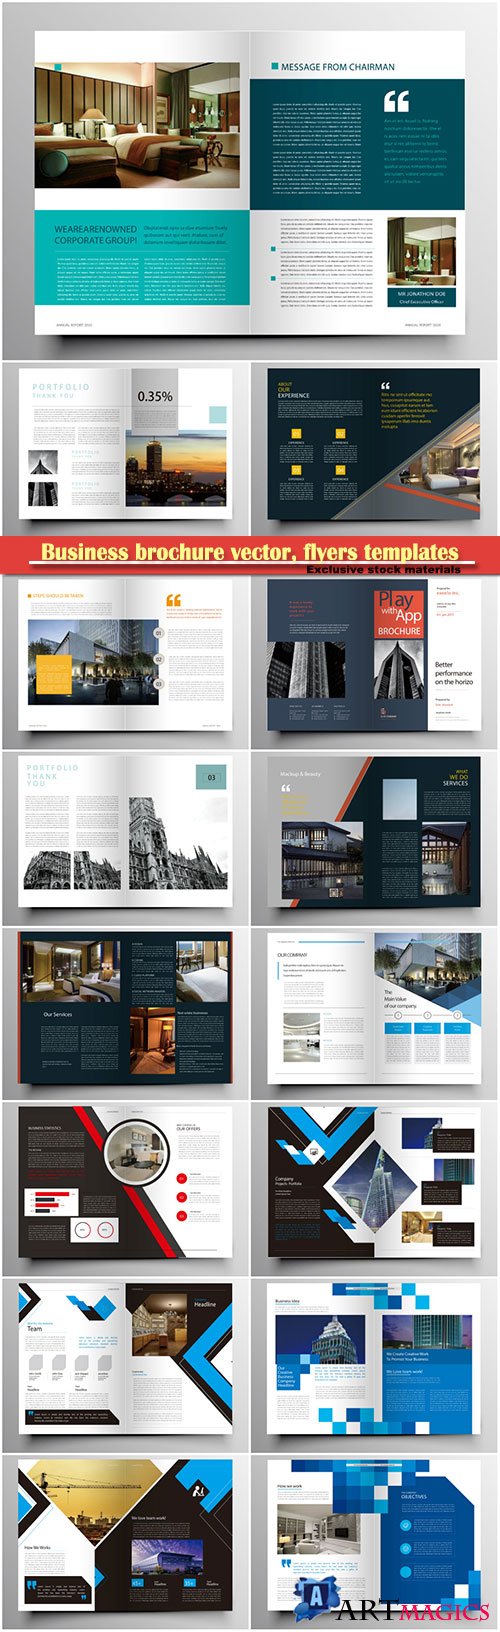 Business brochure vector, flyers templates, report cover design # 93